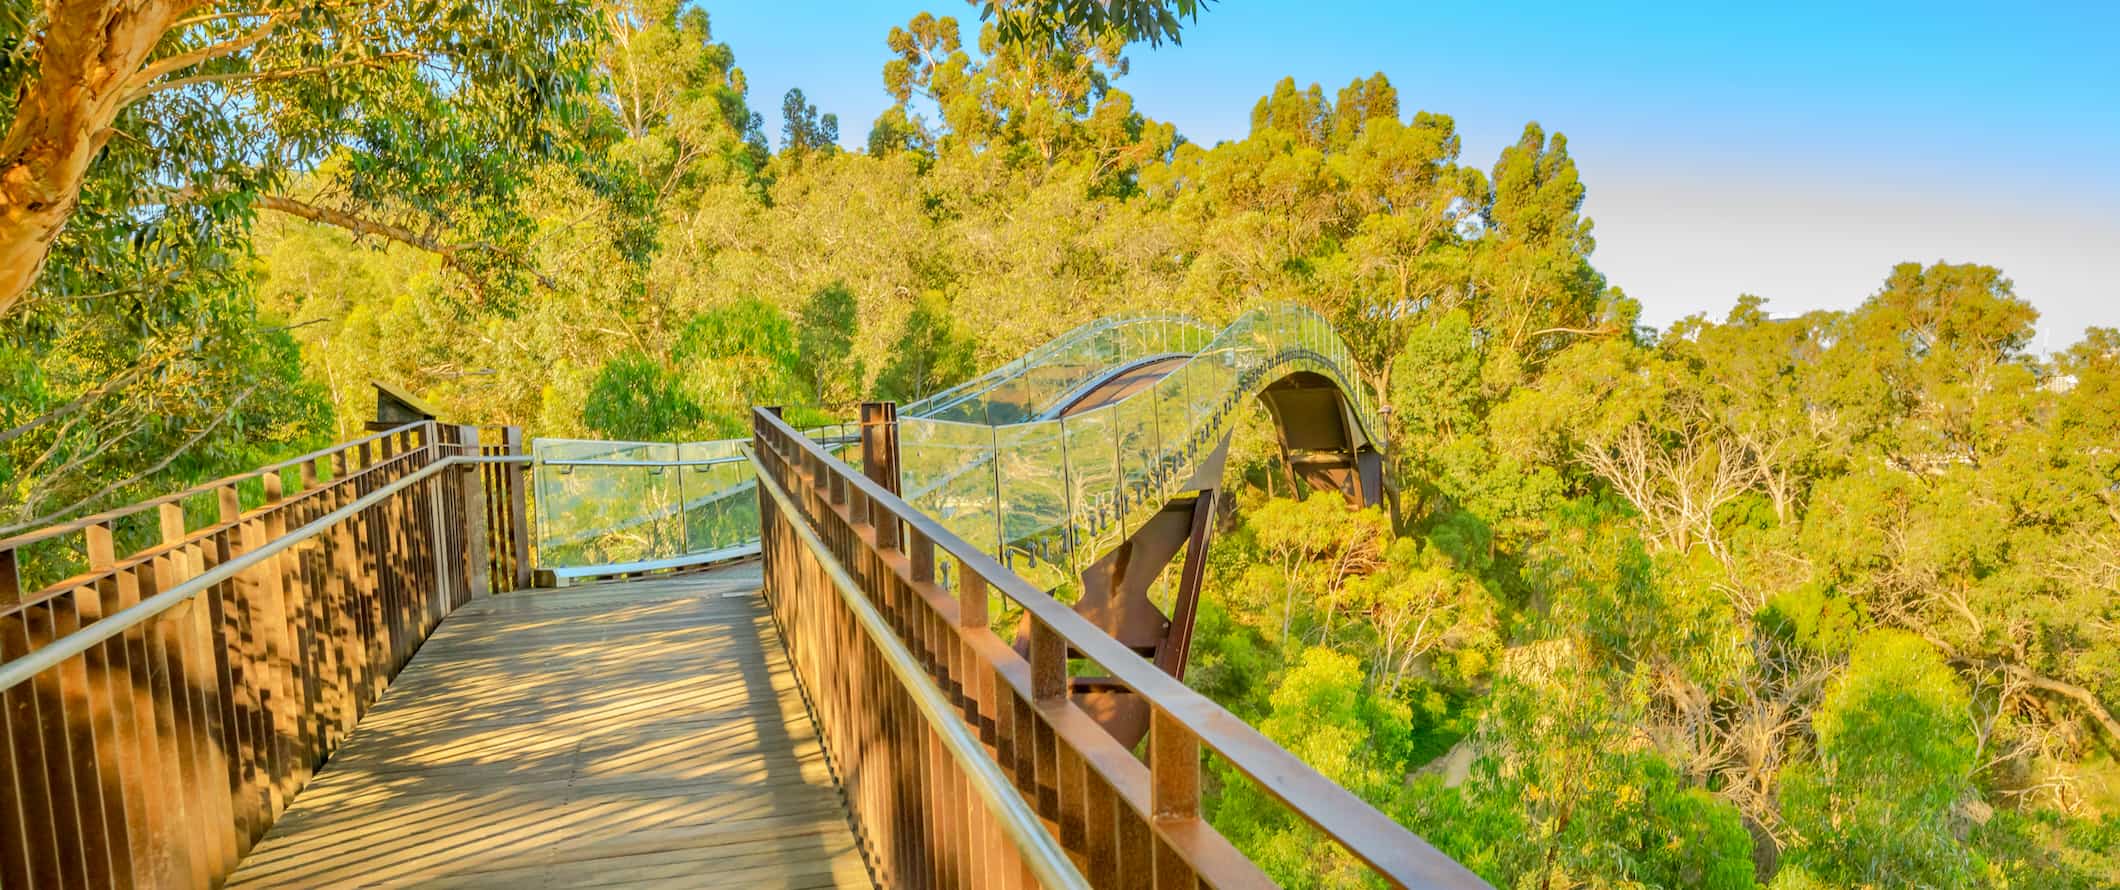 A cool boardwalk through lush greenery near Perth, Australia